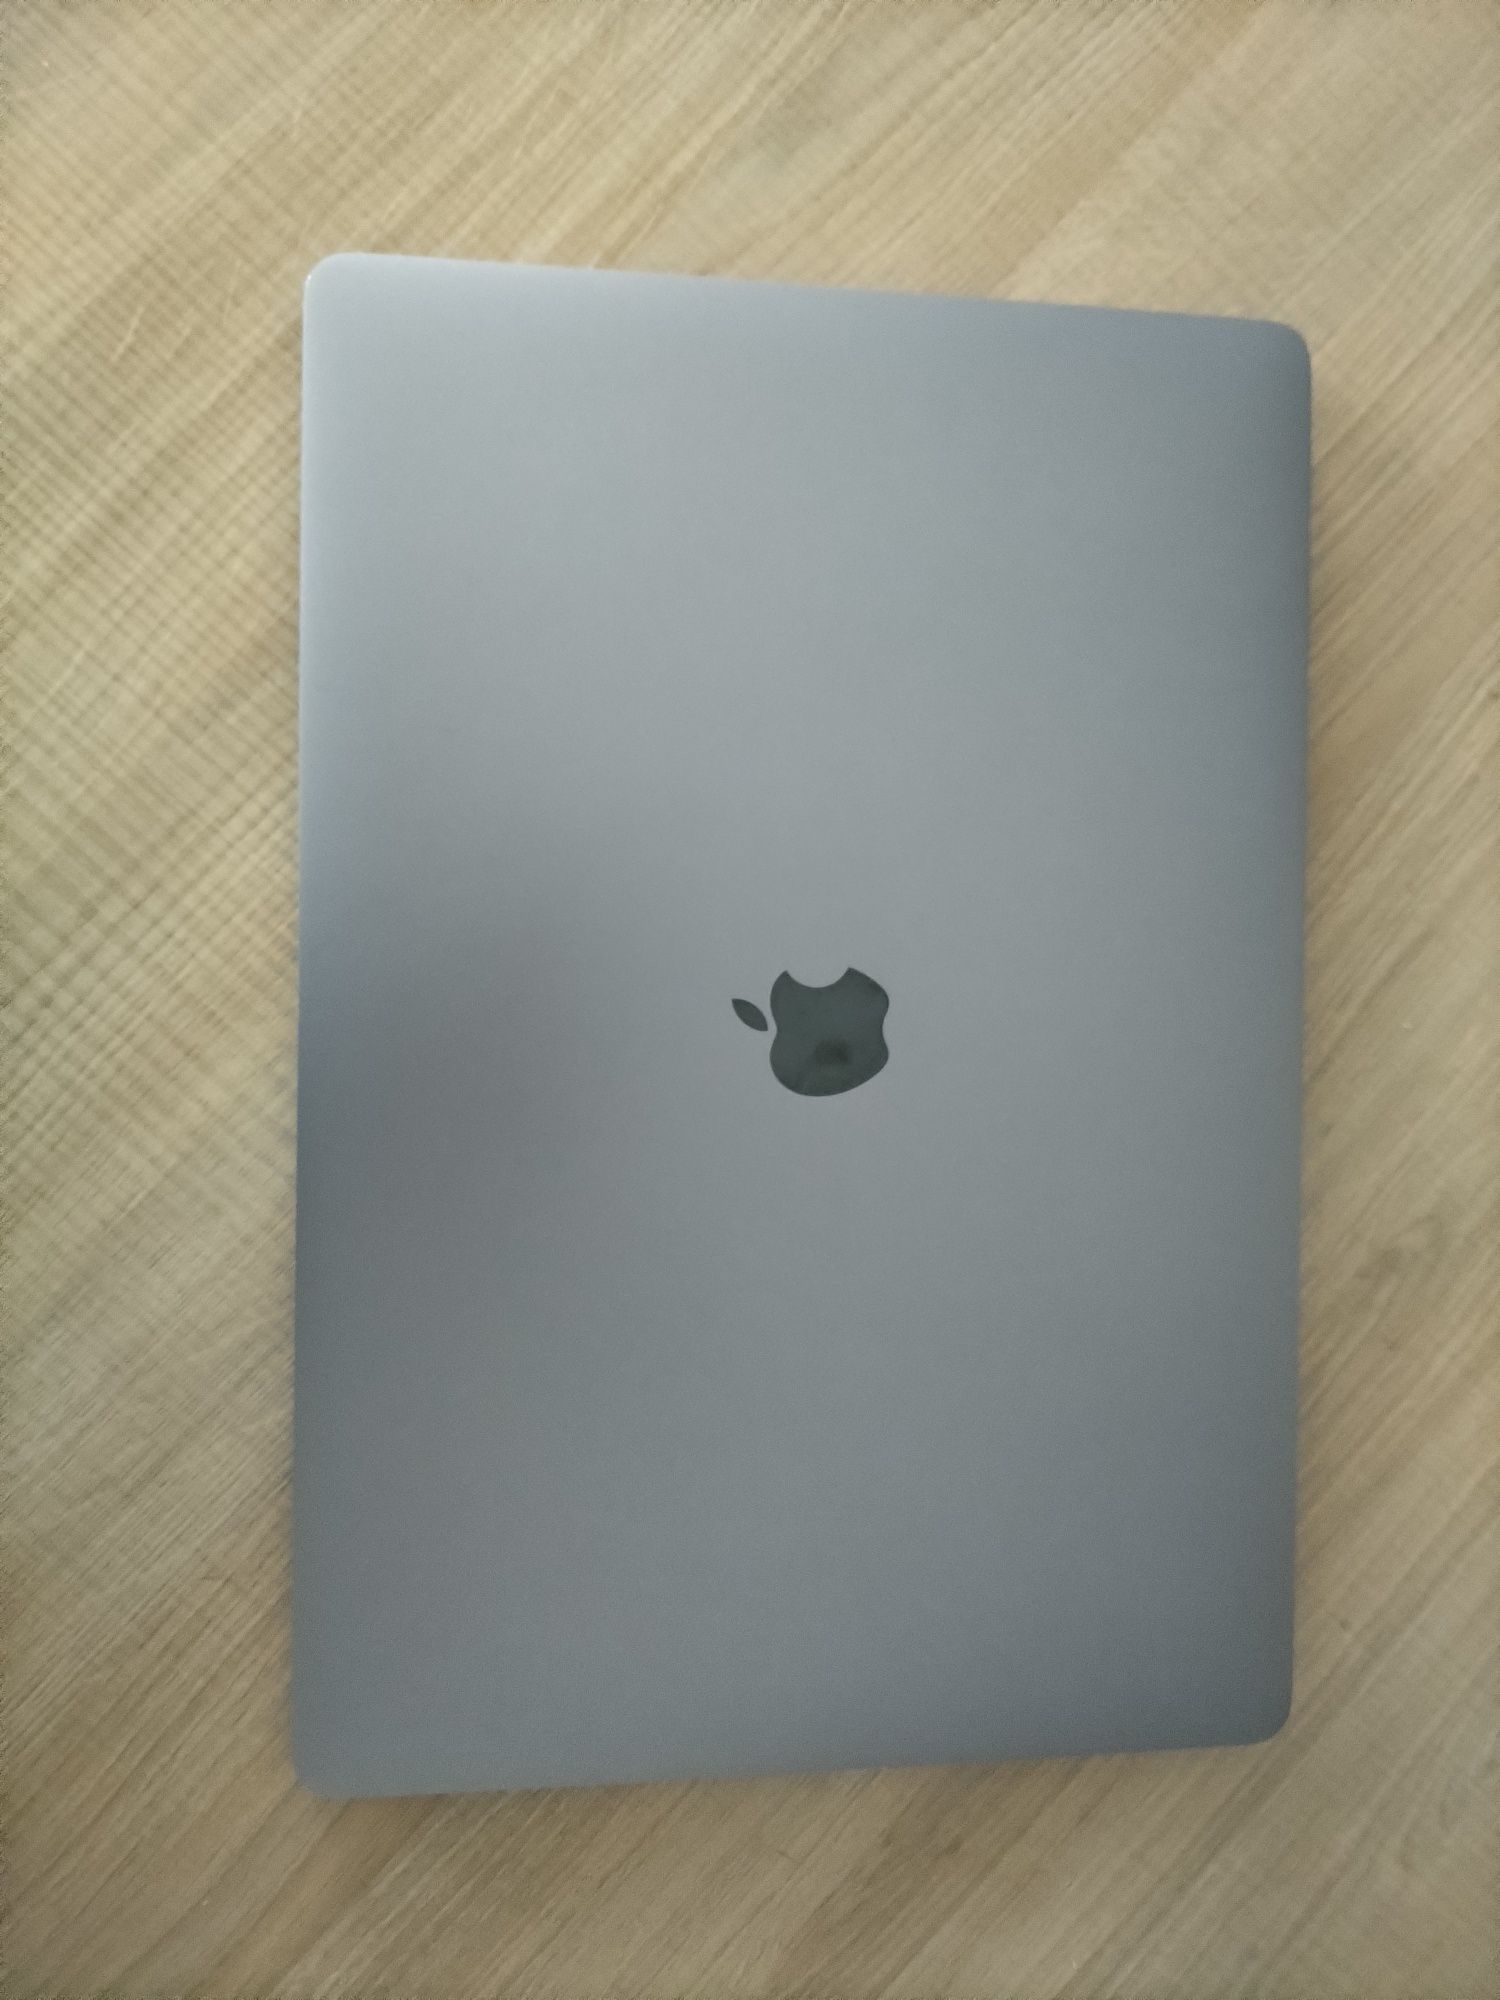 MacBook Pro 2019 16-inch / 16GB / 2.6ghz 6 core